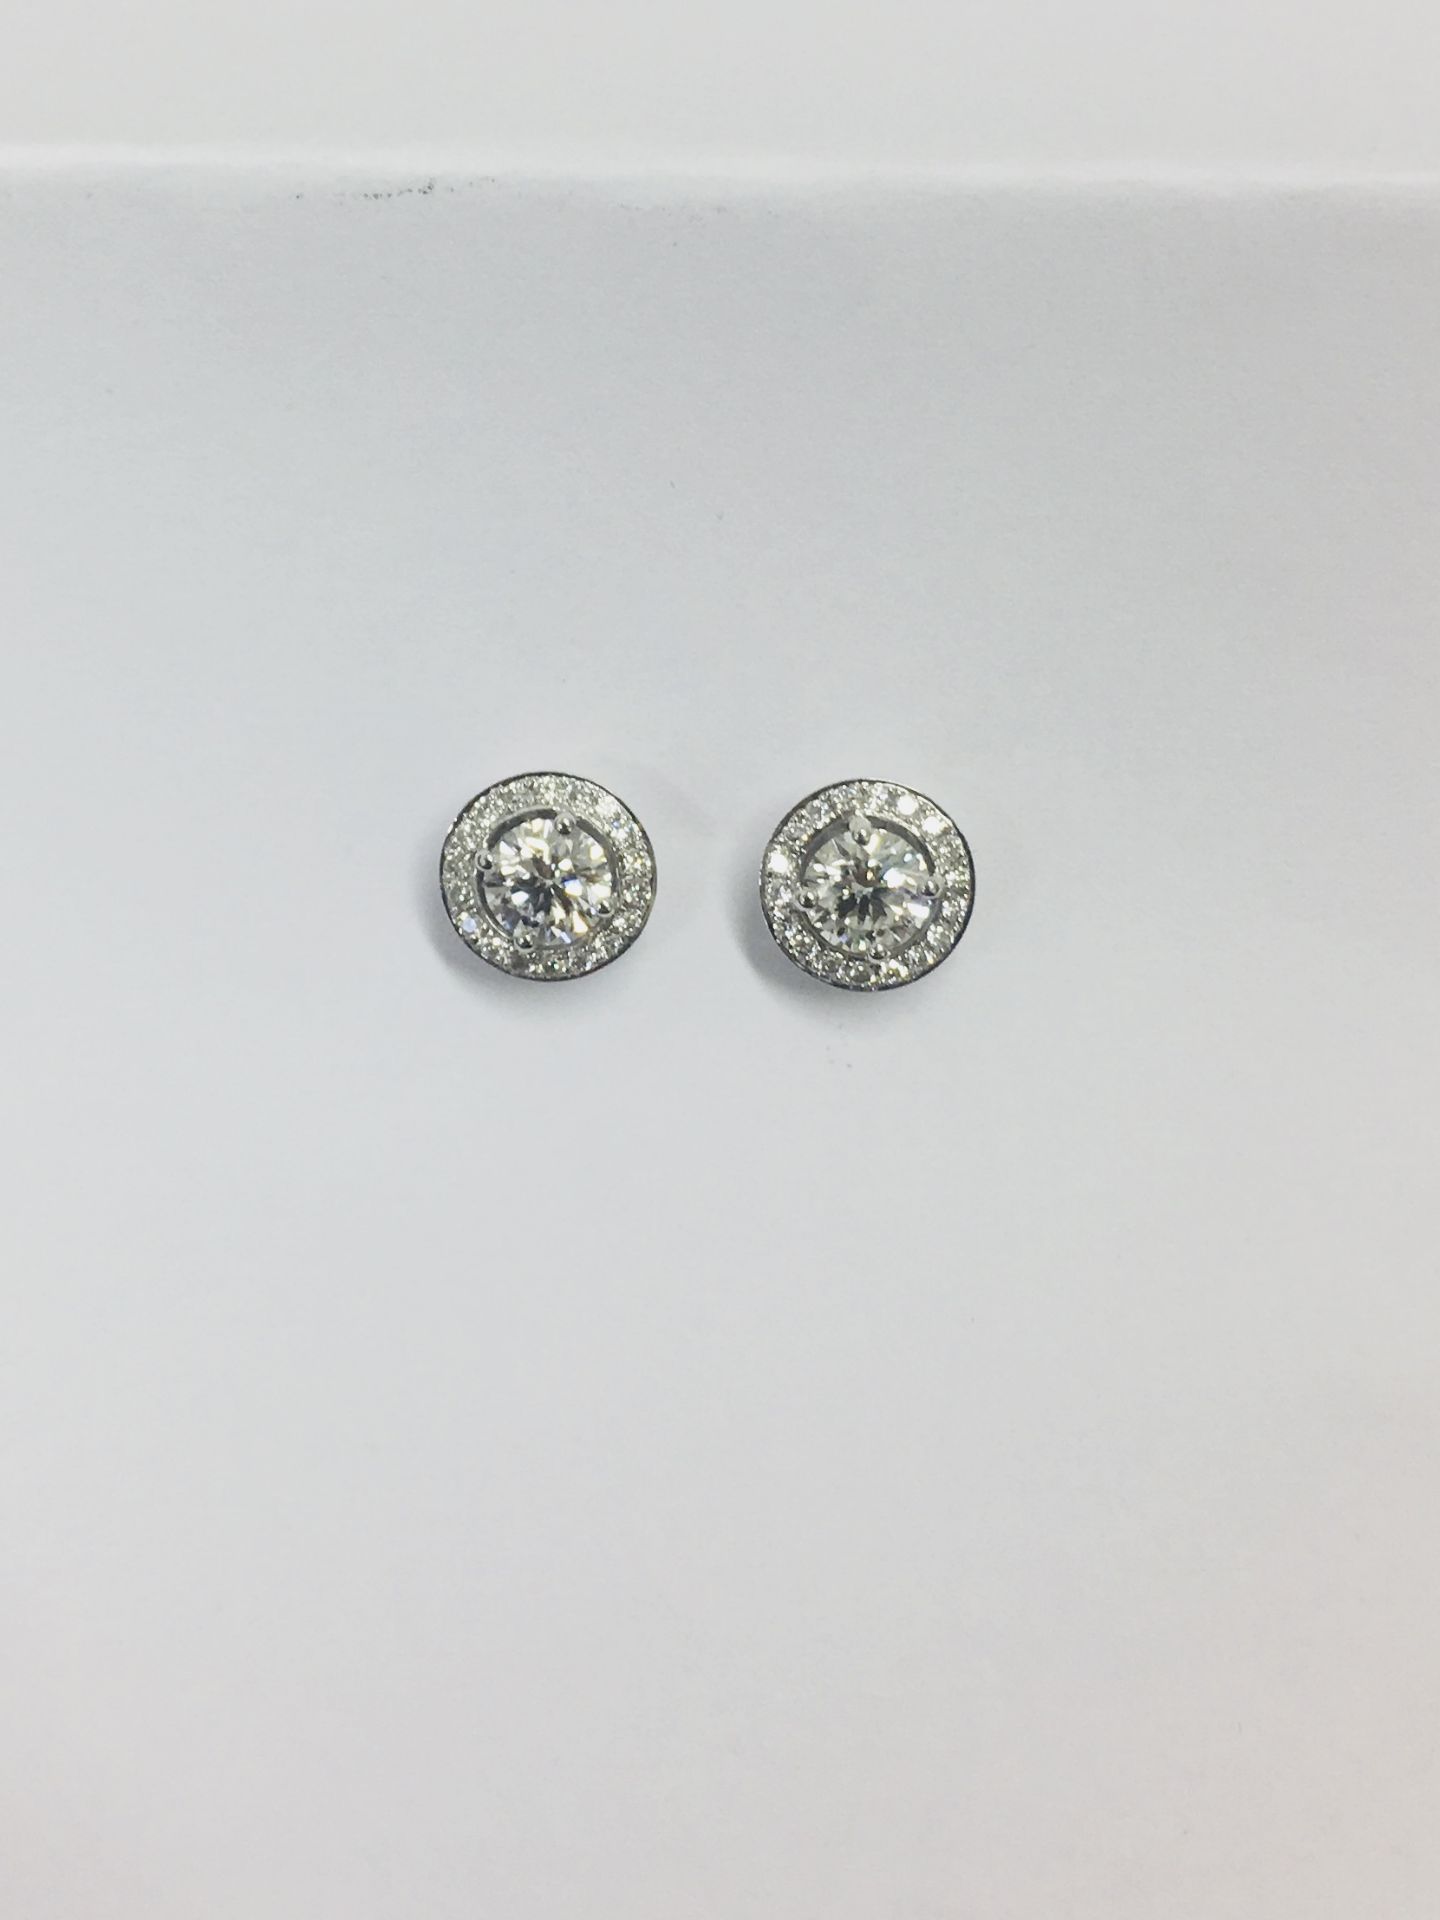 18ct white gold Halo diamond stud earring,1.00ct 2 diamond s h vs grade ,2.7gms 18ct appraisal 6950 - Image 3 of 4